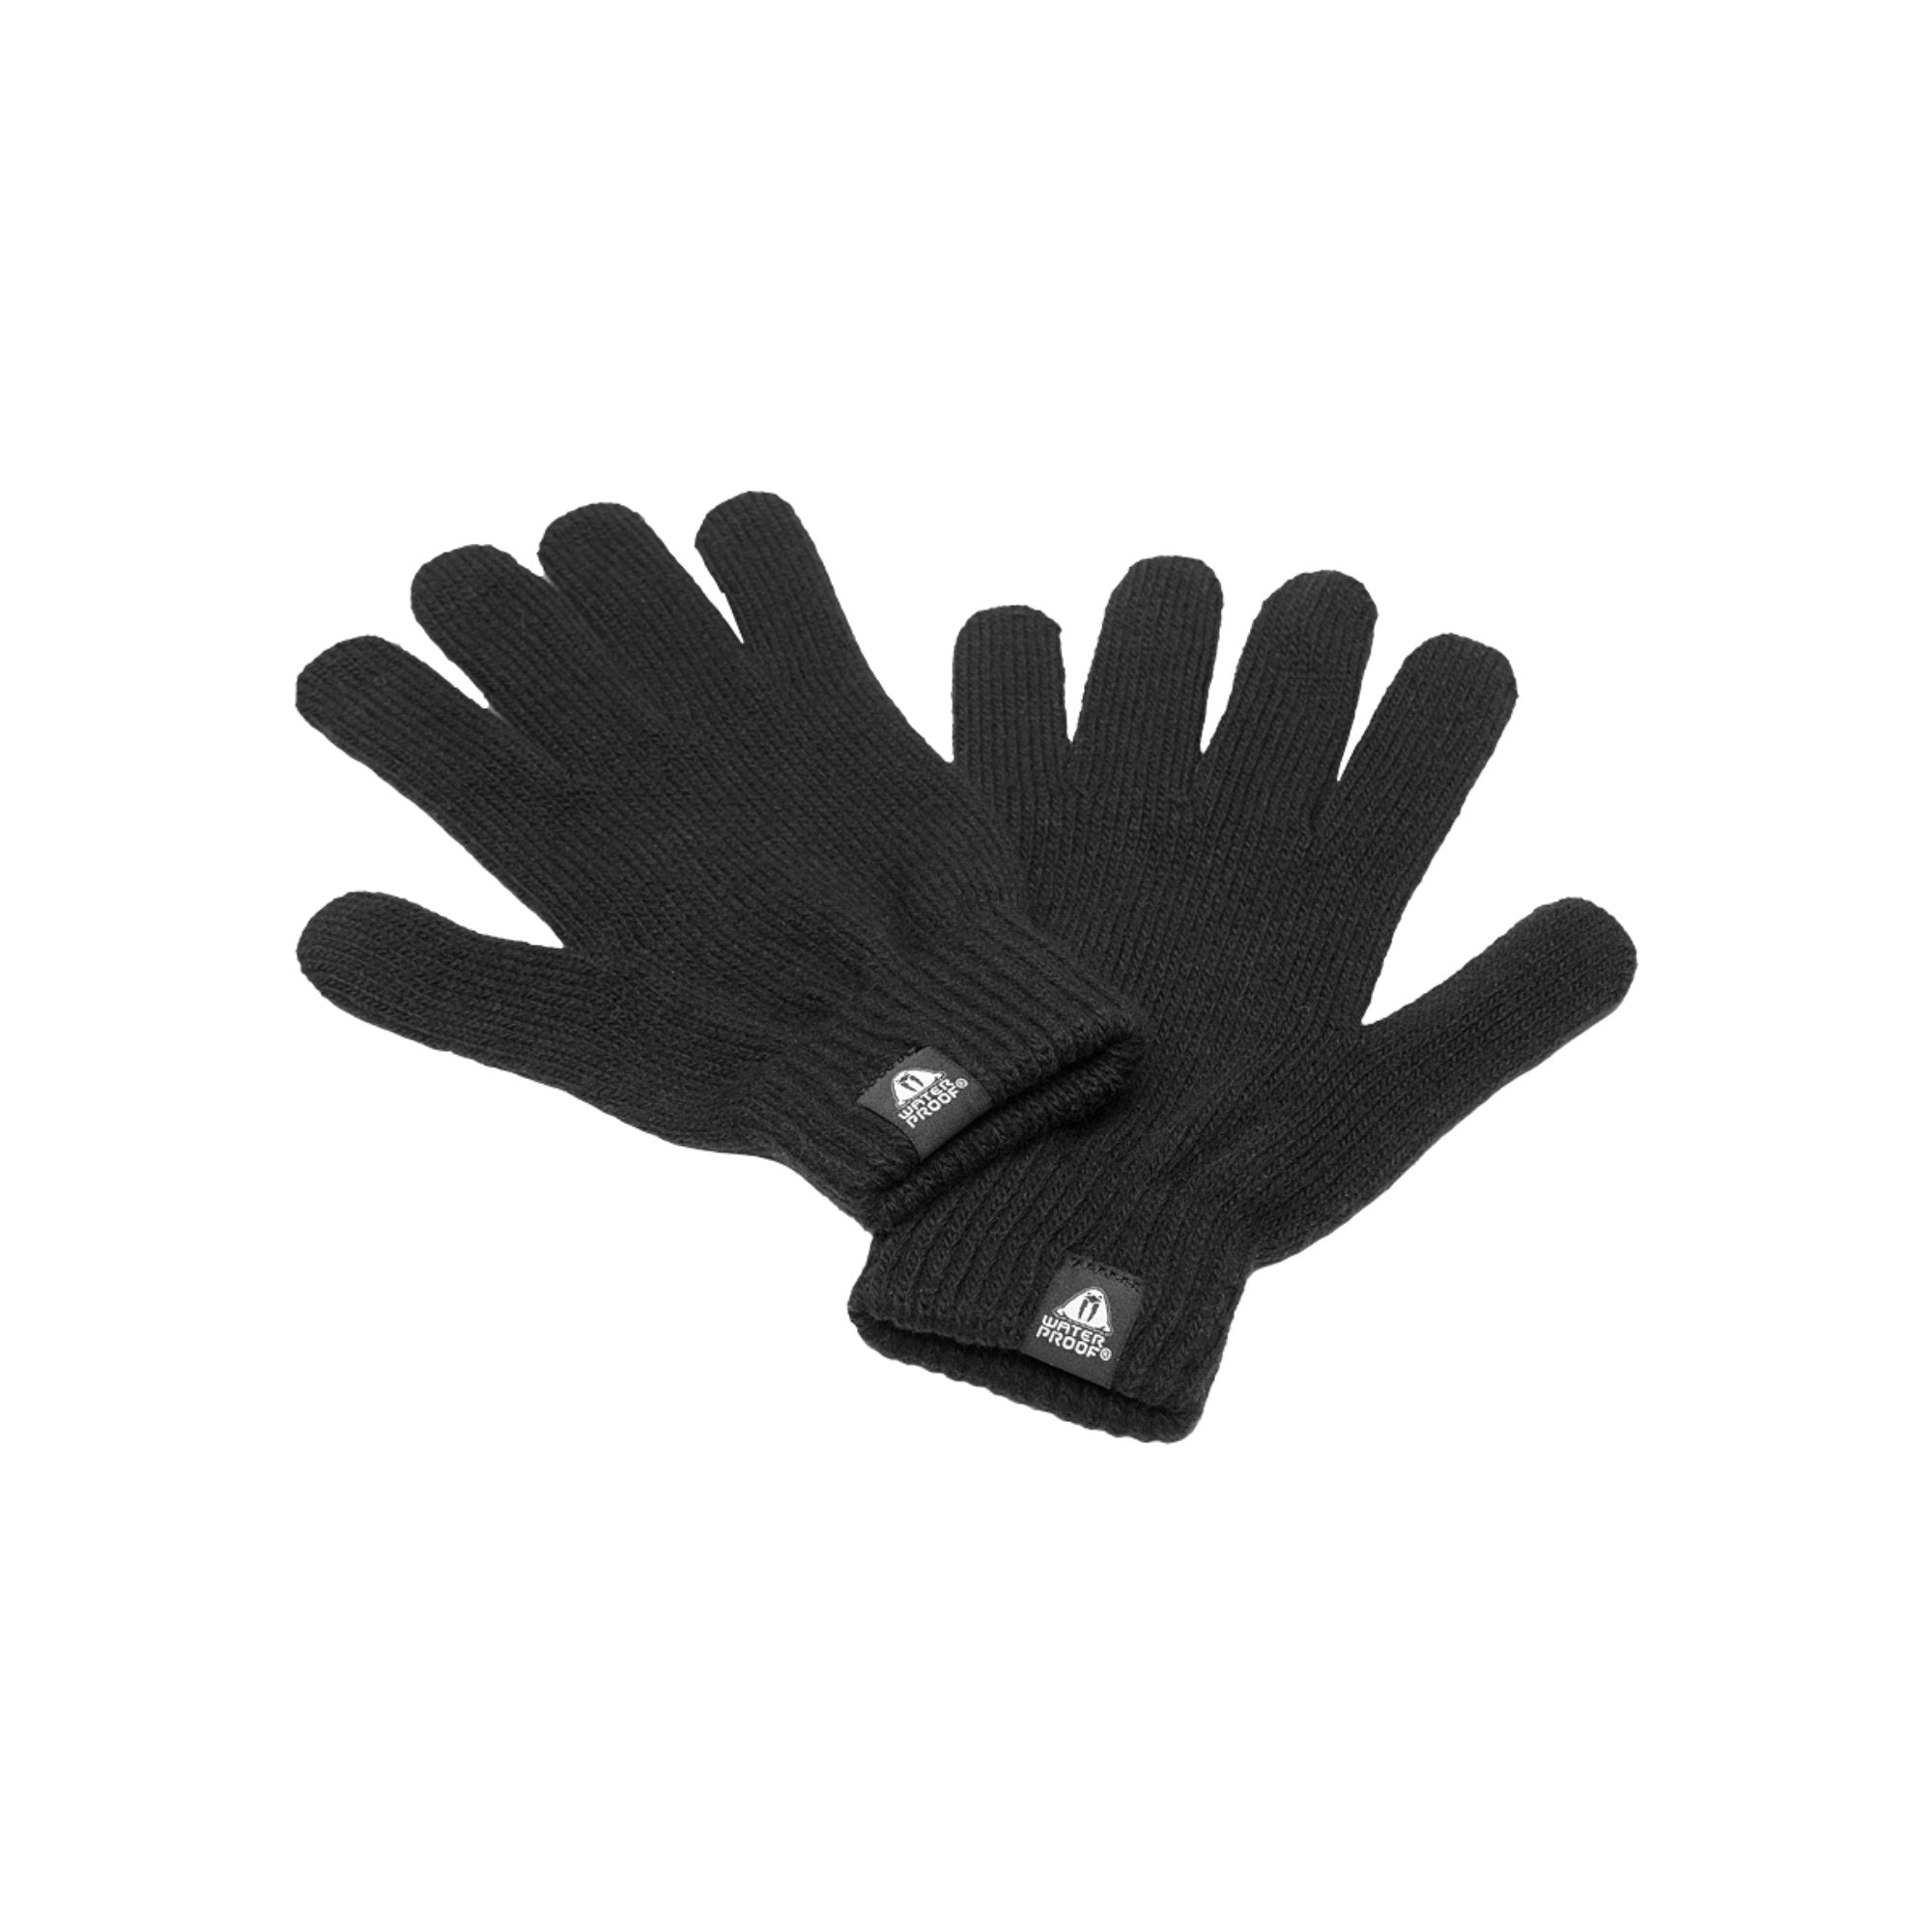 Latex Trockenhandschuhe HD mit thermo Handschuhen